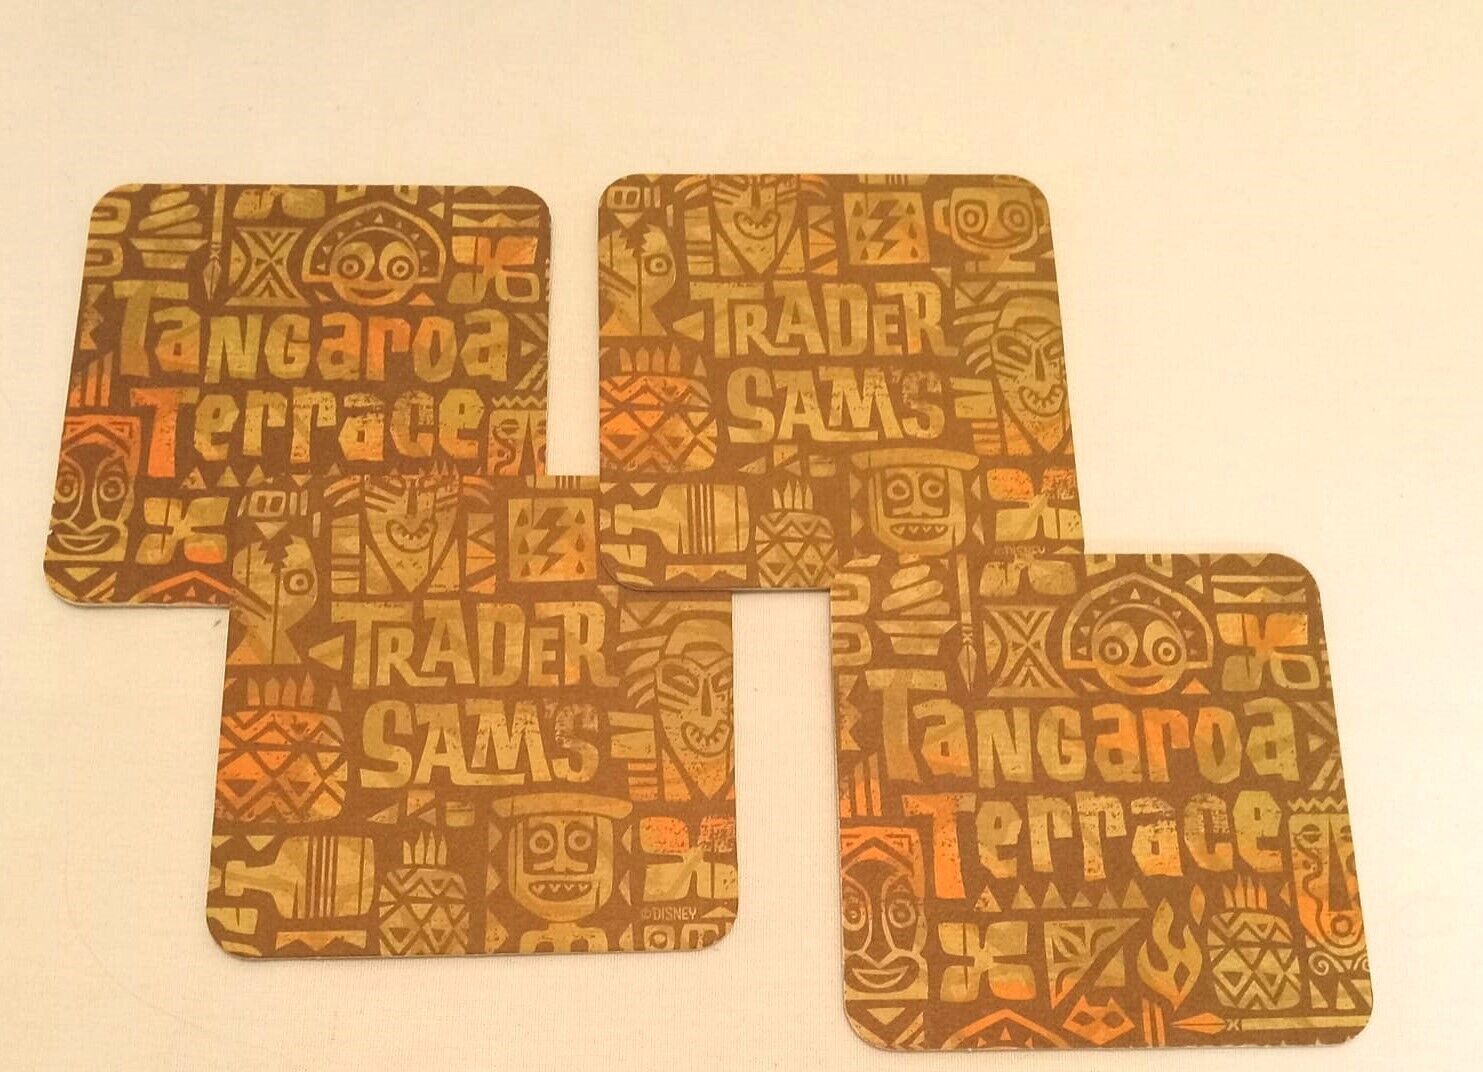 Disneyland Trader Sam's Coasters, set of 4 identical, new, and unused